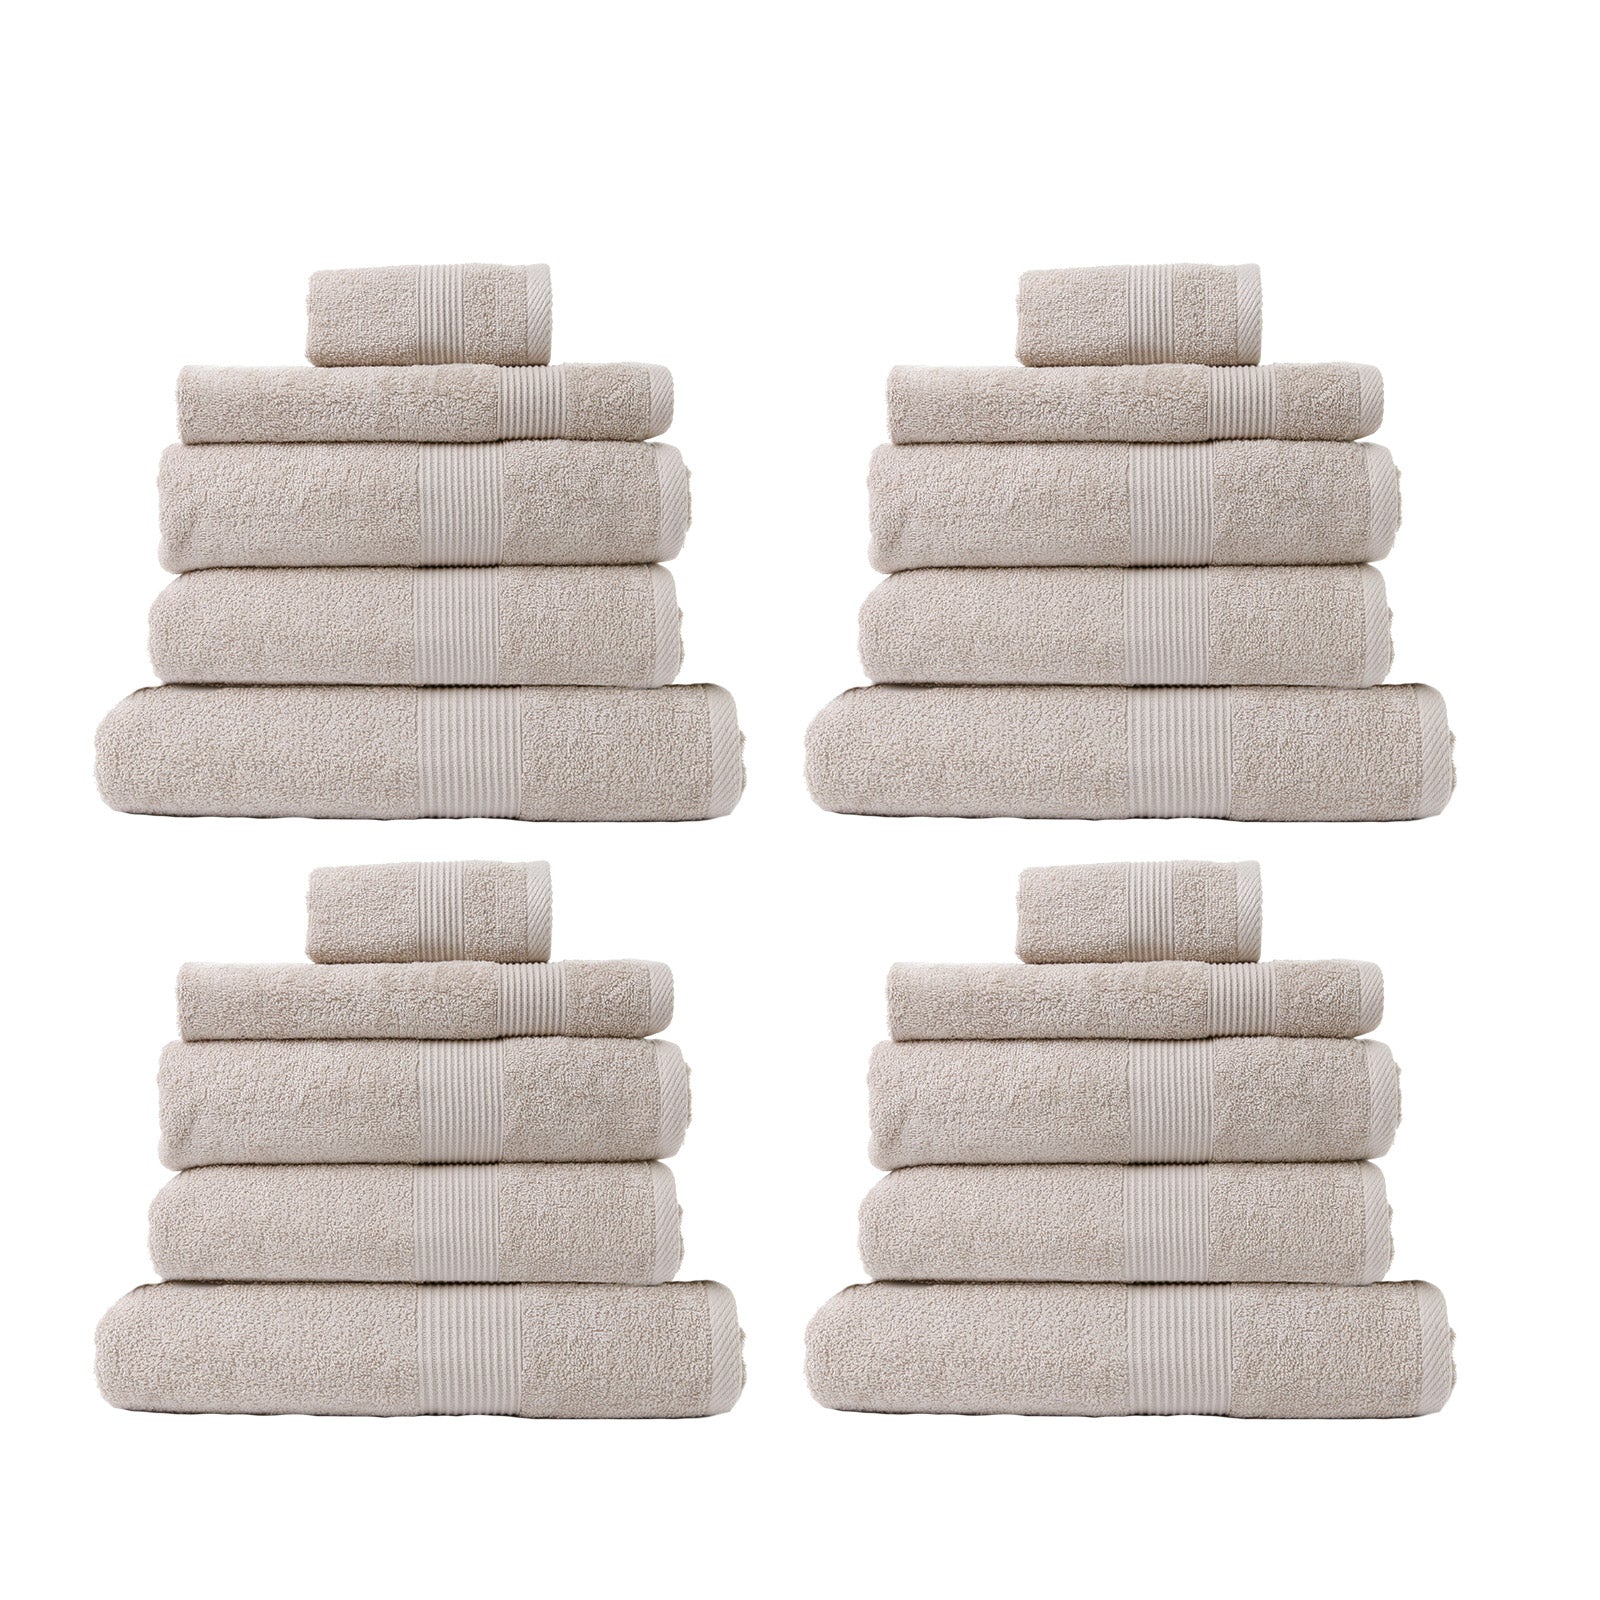 20 Piece Cotton Bamboo Towel Bundle Set 450GSM Luxurious Absorbent - Beige